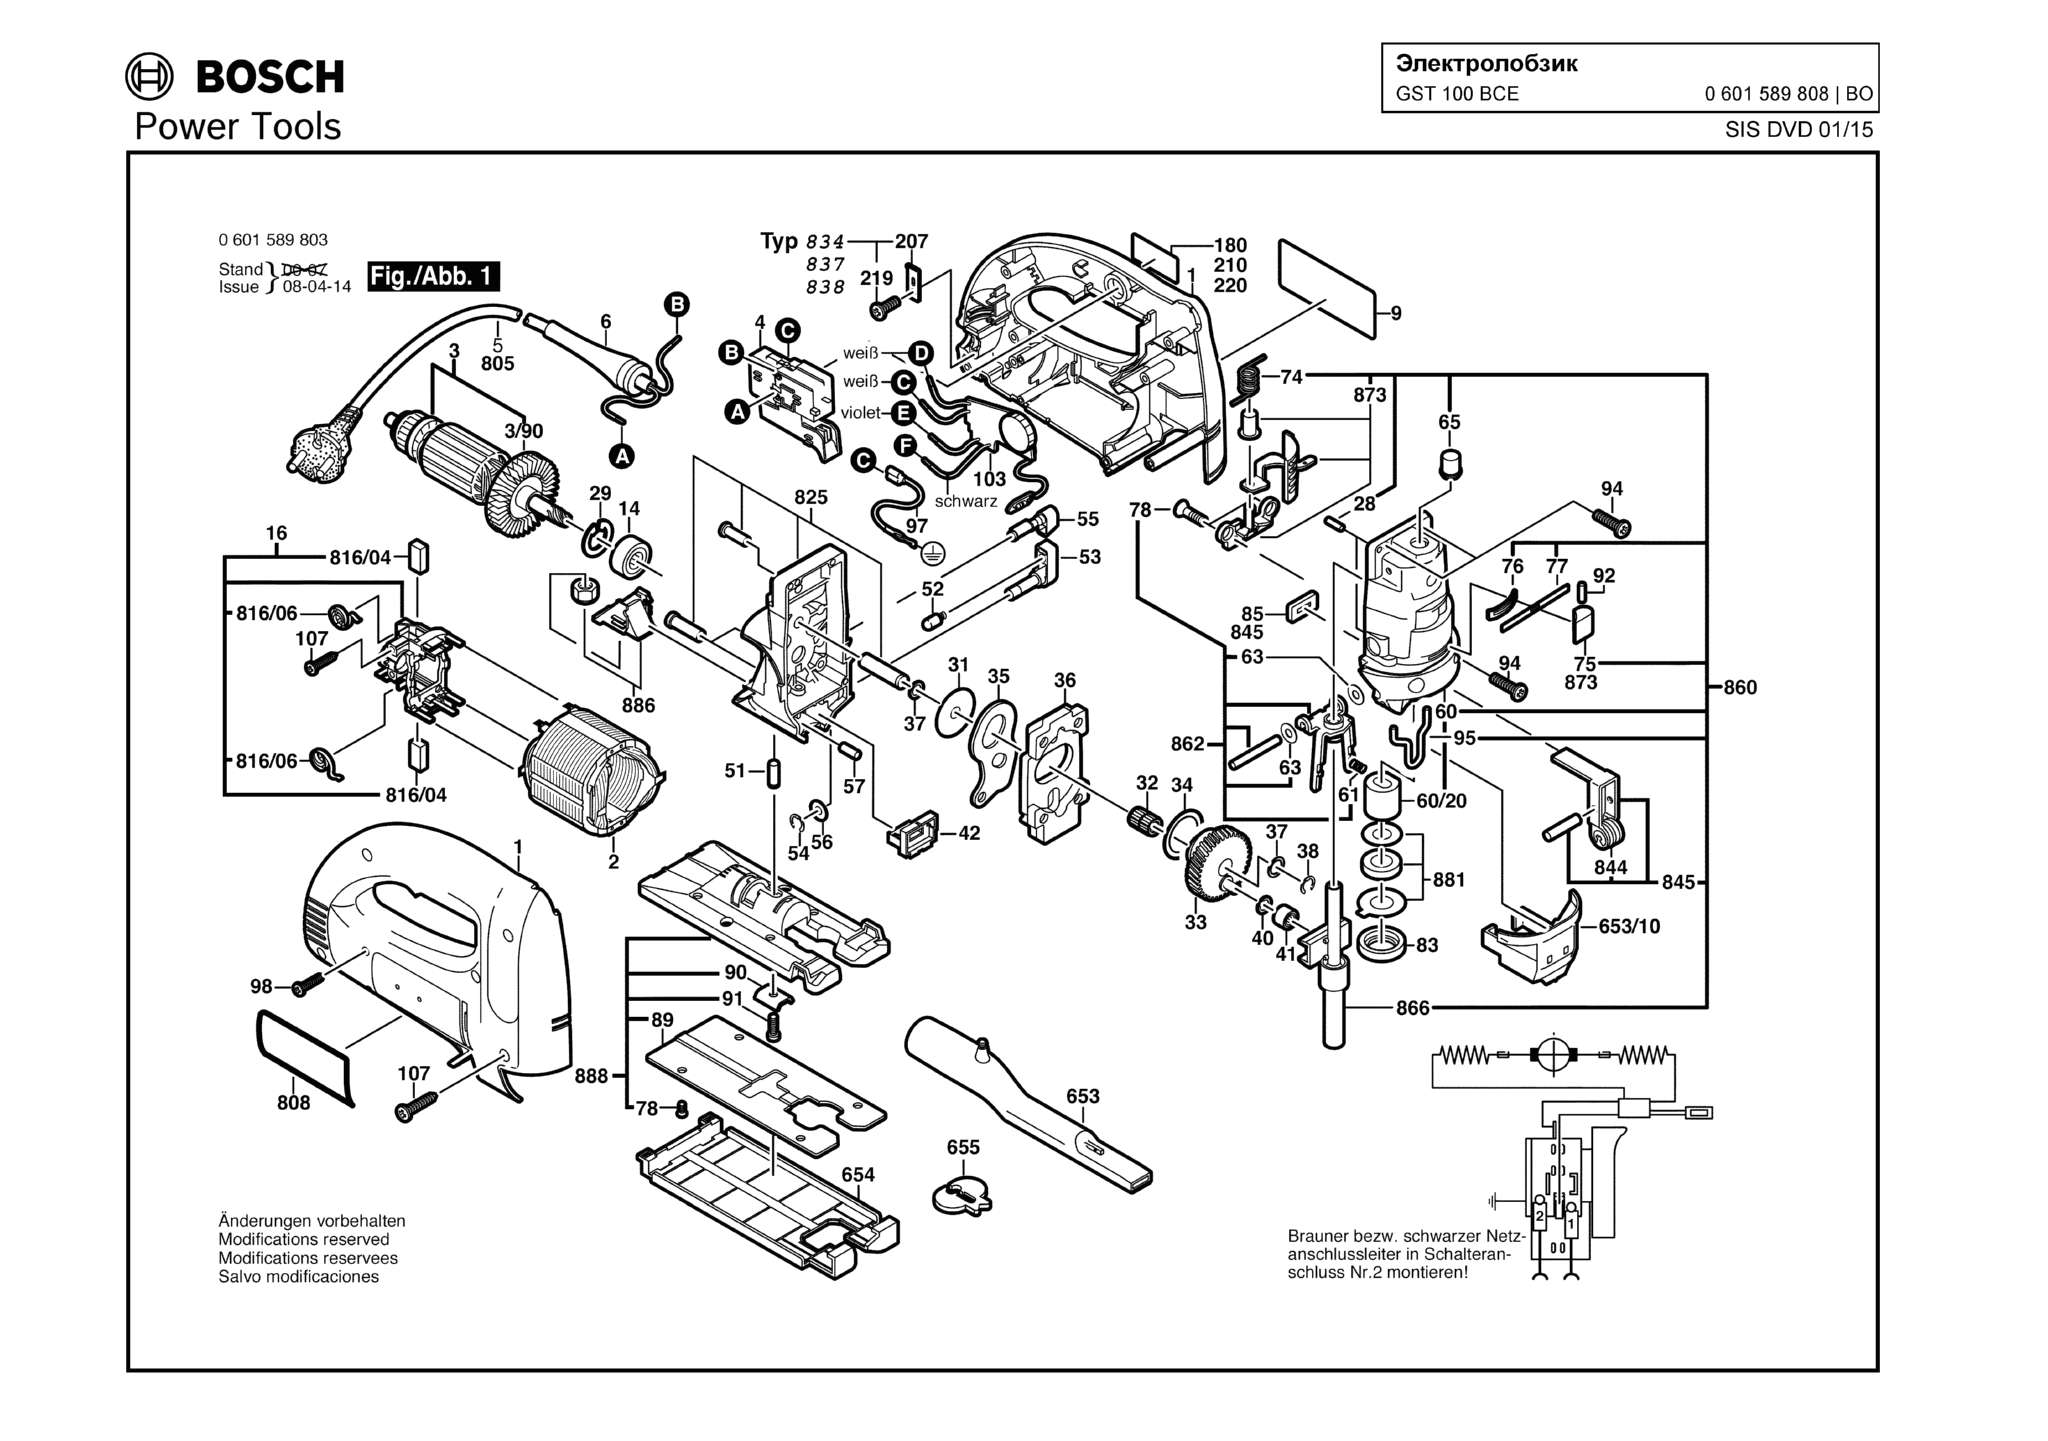 Запчасти, схема и деталировка Bosch GST 100 BCE (ТИП 0601589808)